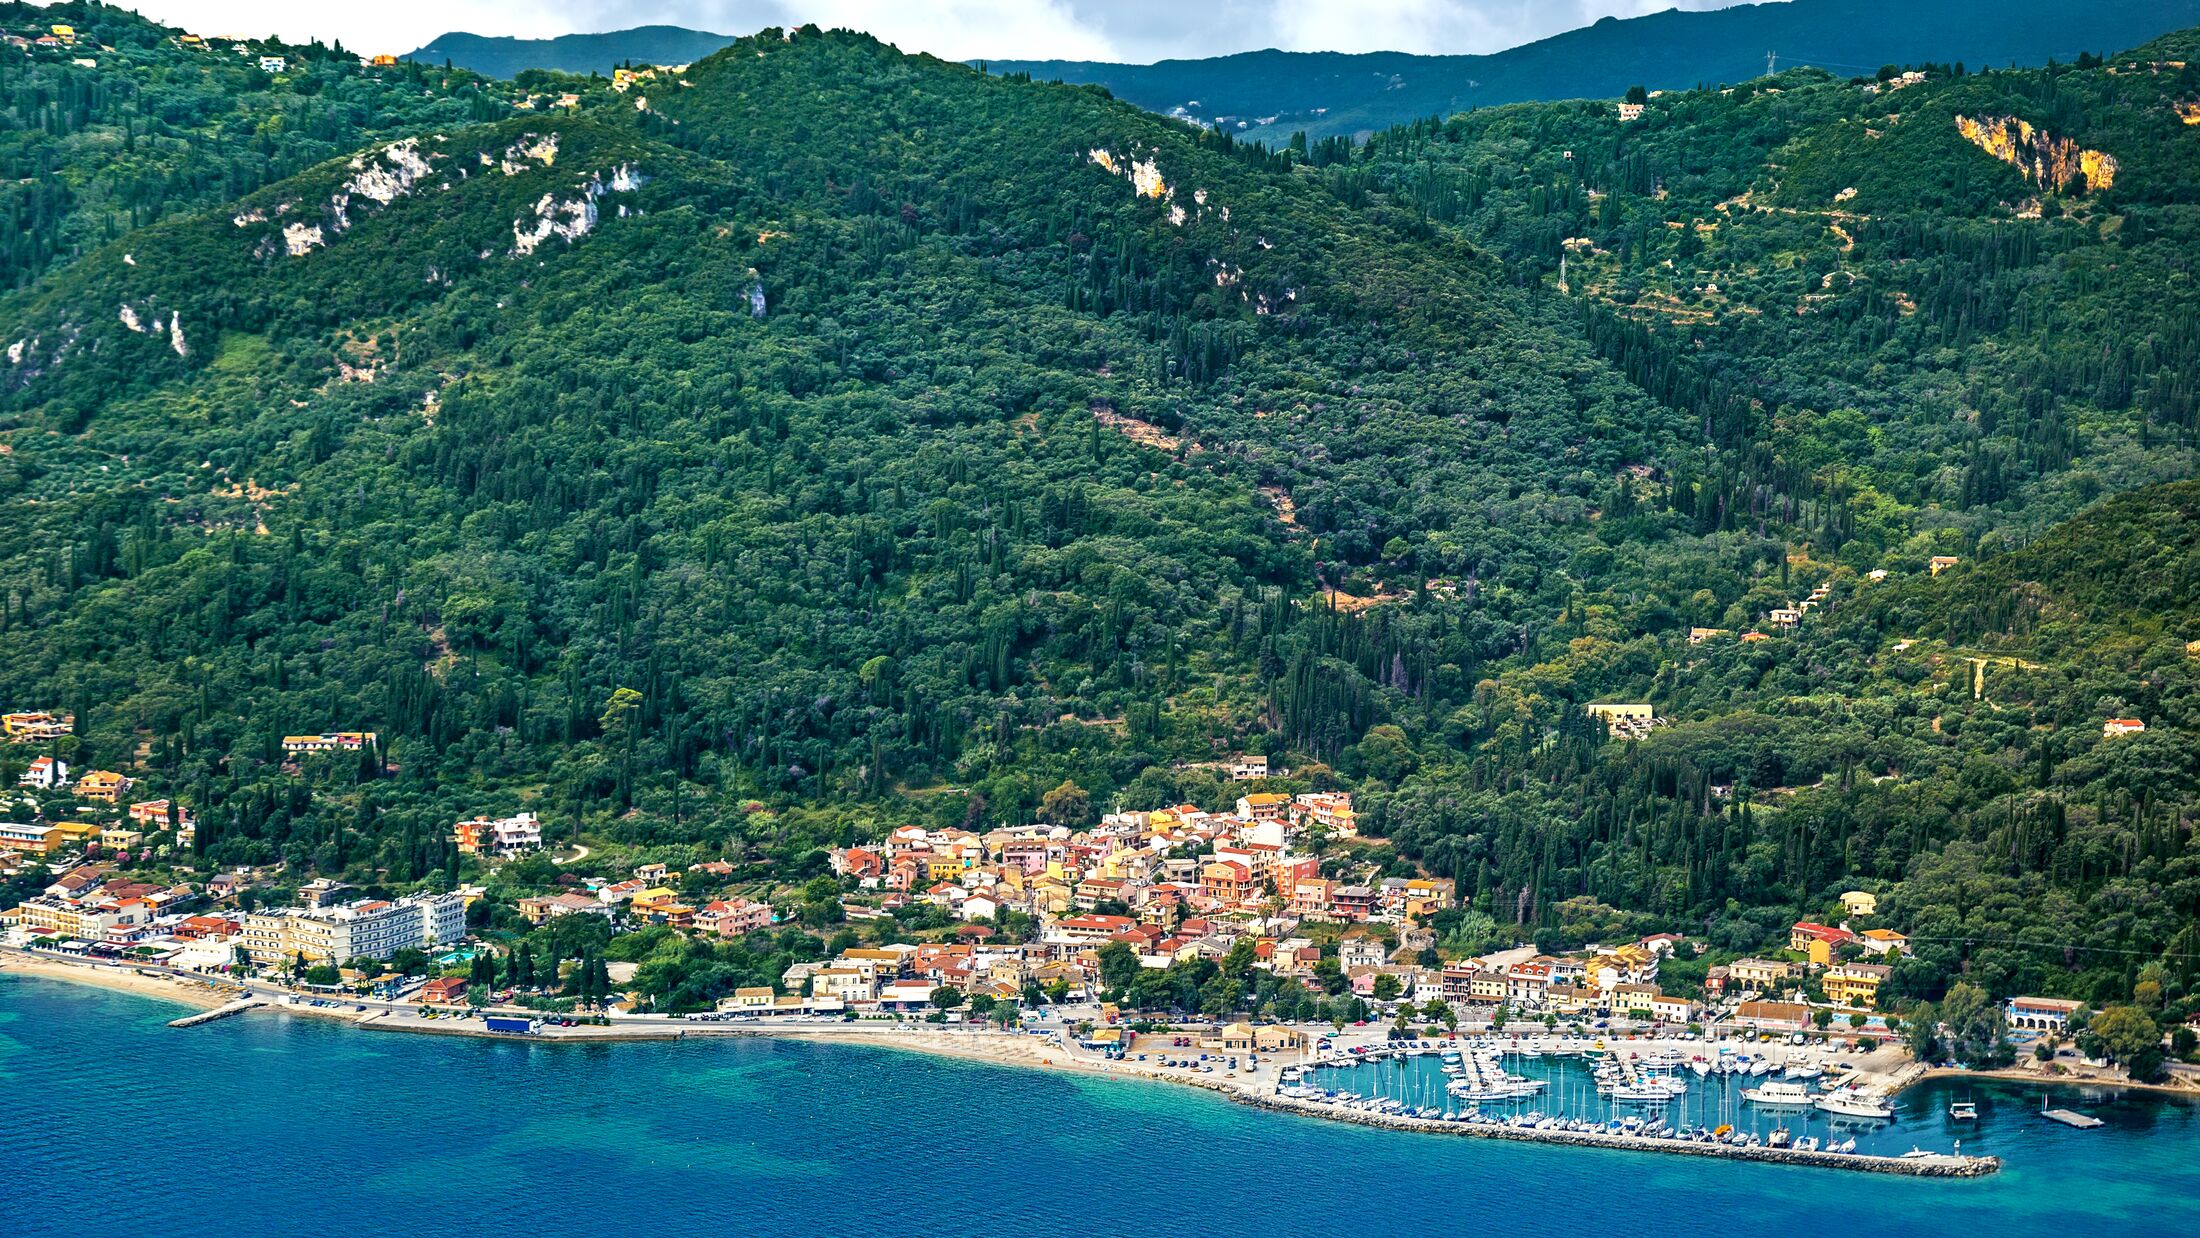 Aerial view of the eastern coast of Corfu in the neighborhood of Benitses, Greece